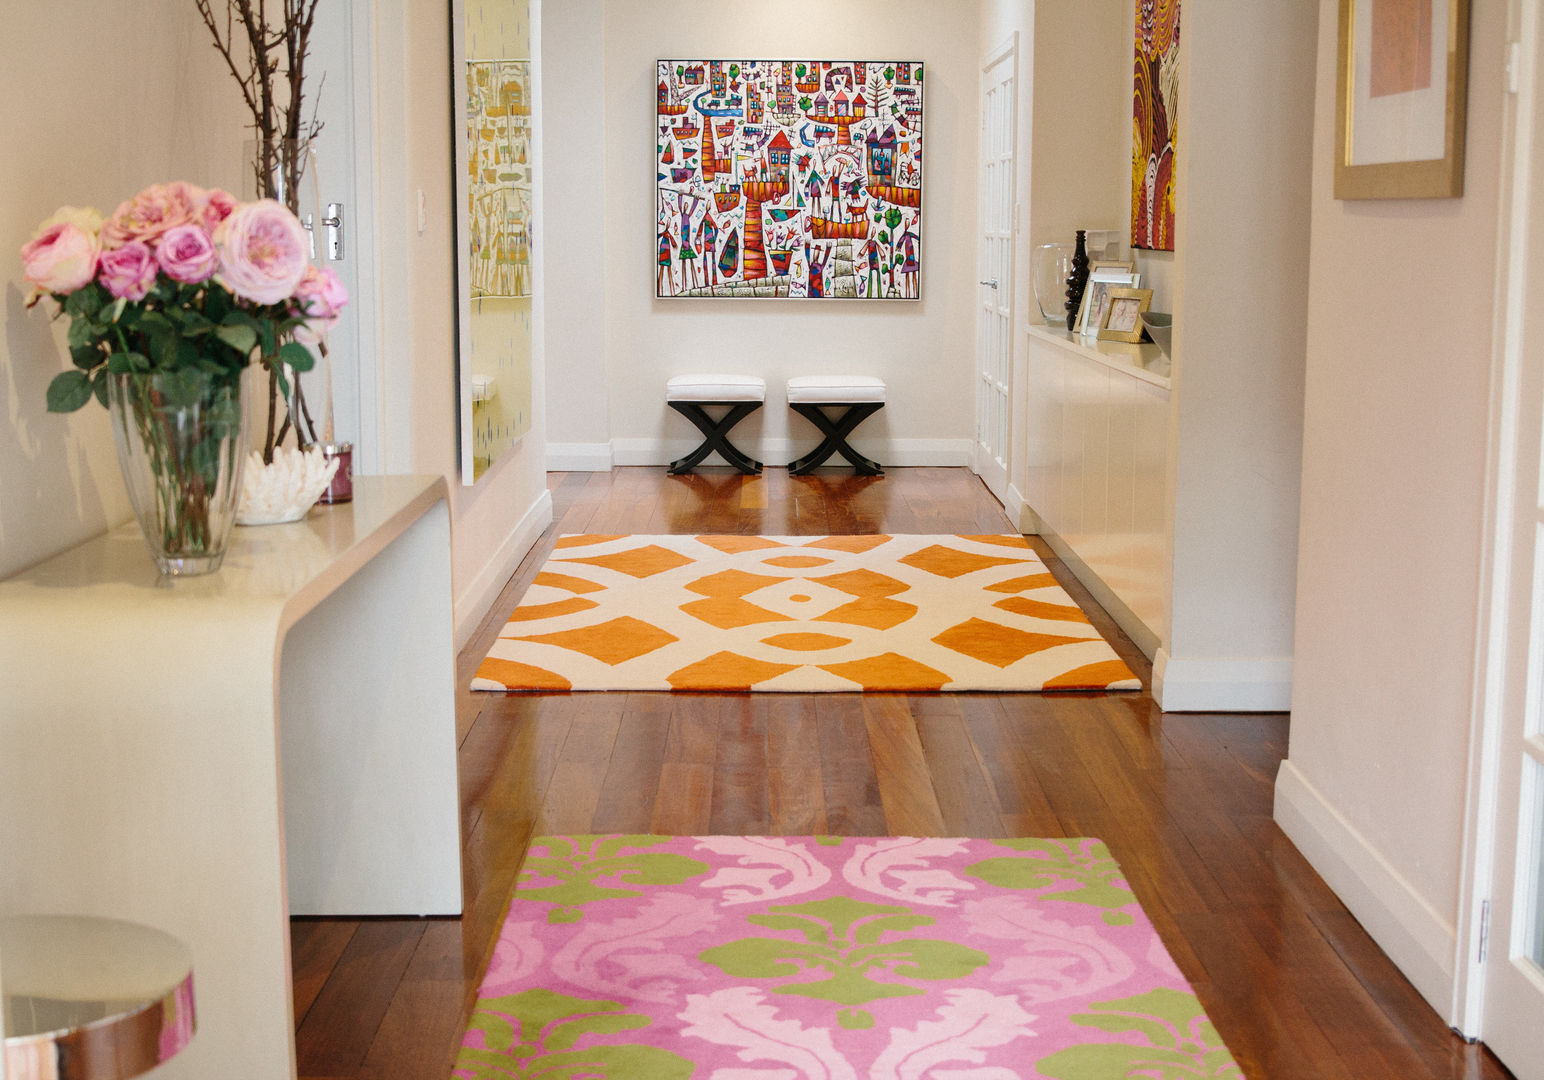 Indie Style Interiors - custom rug design Indie Style Interiors إنتقائي، أسلوب، الرواق، رواق، &، درج